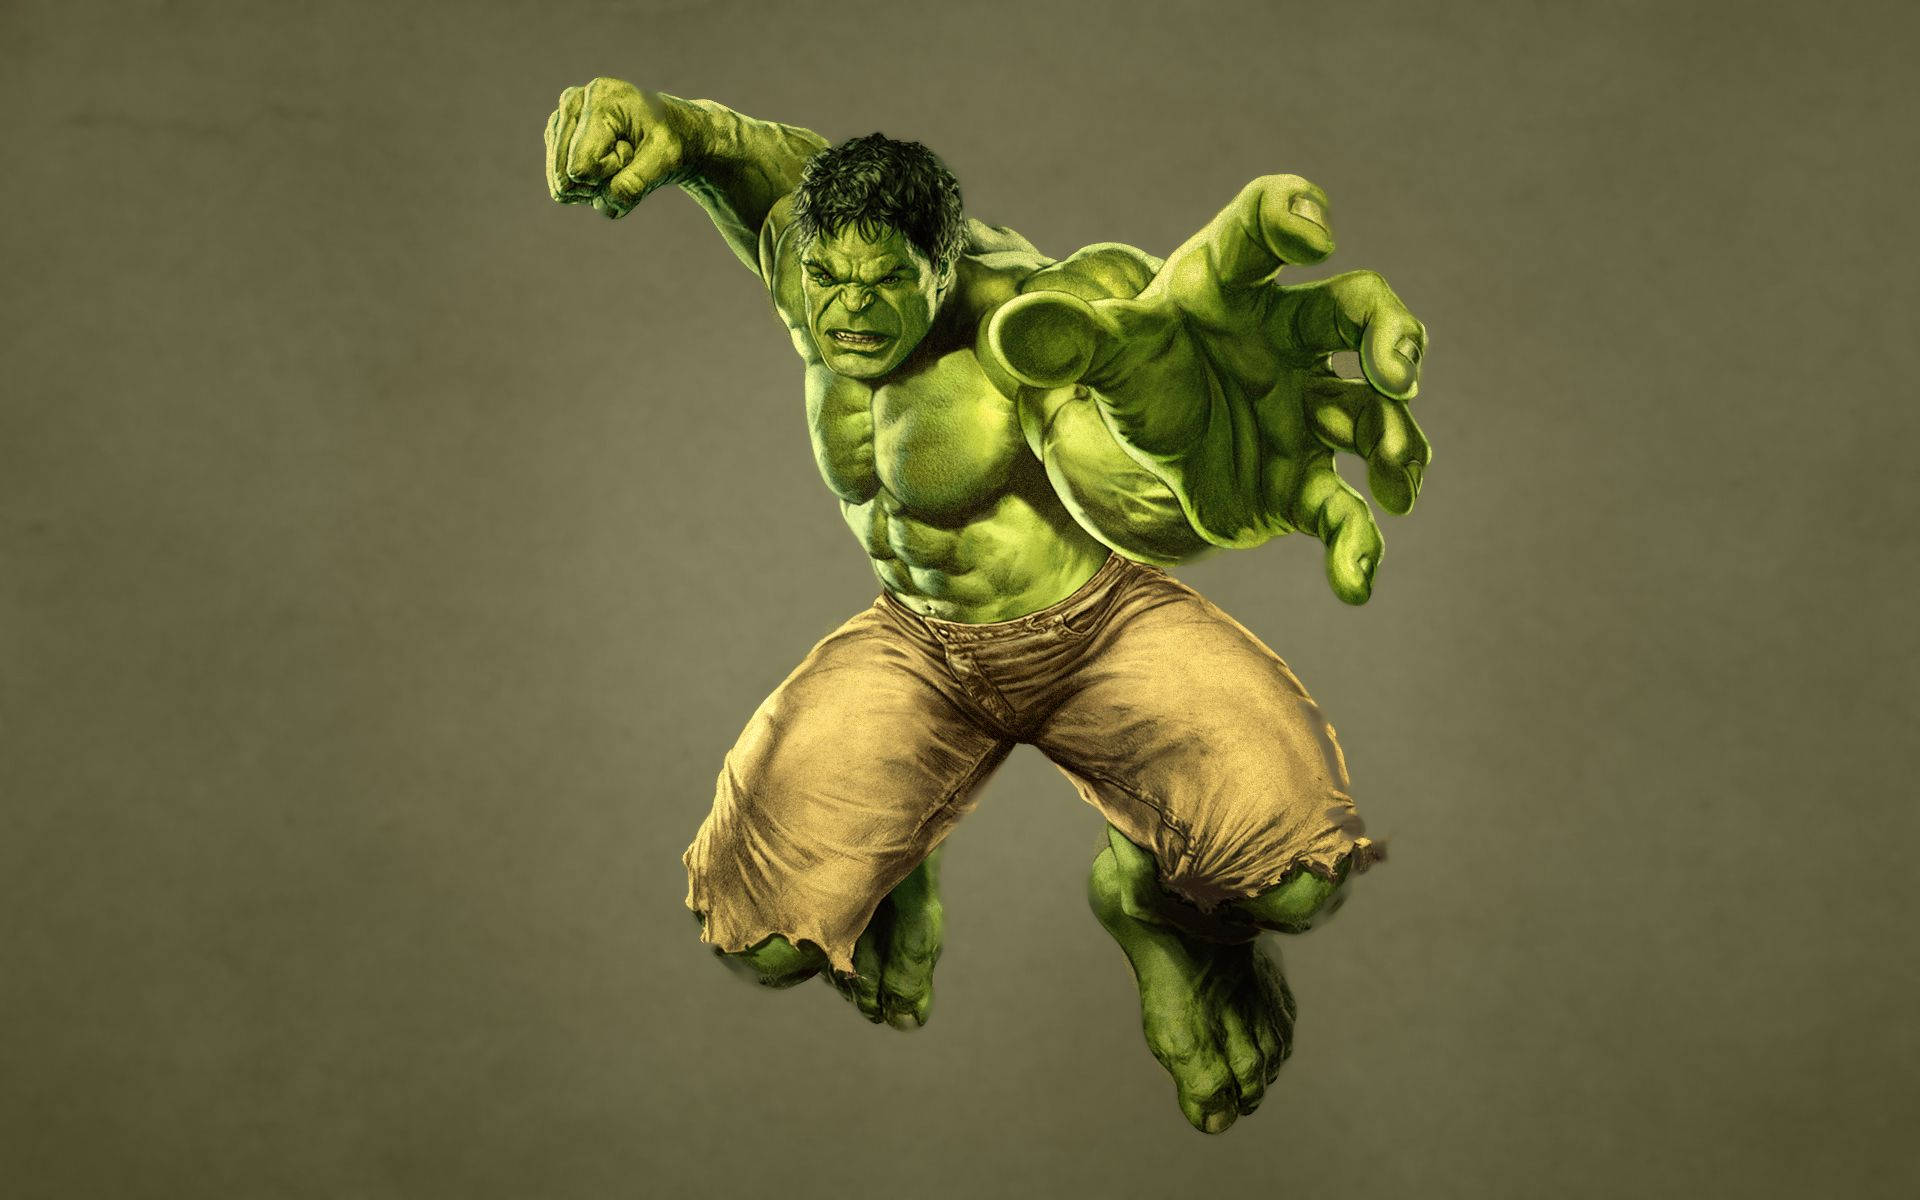 Punching And Leaping Hulk Wallpaper